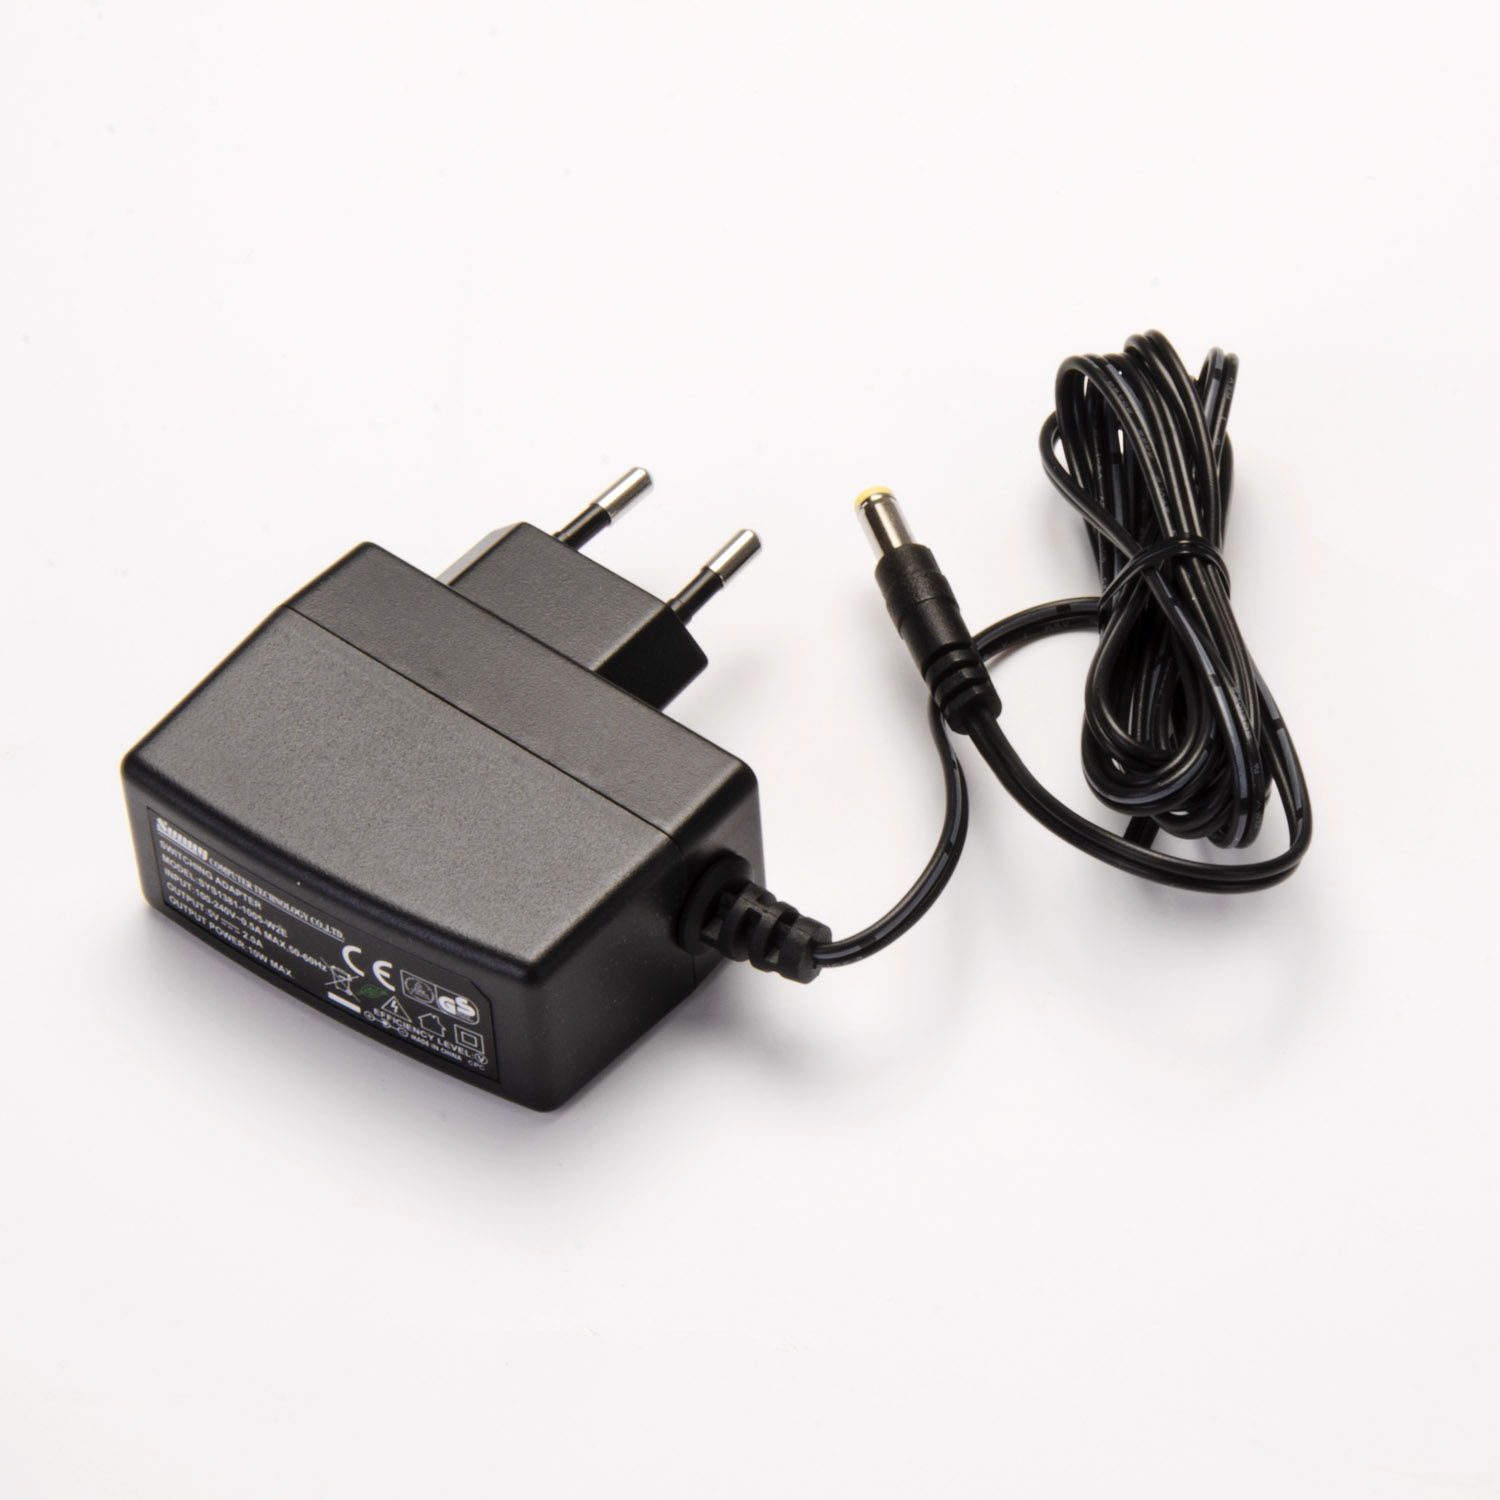 Plug-in power supply 5V/2A